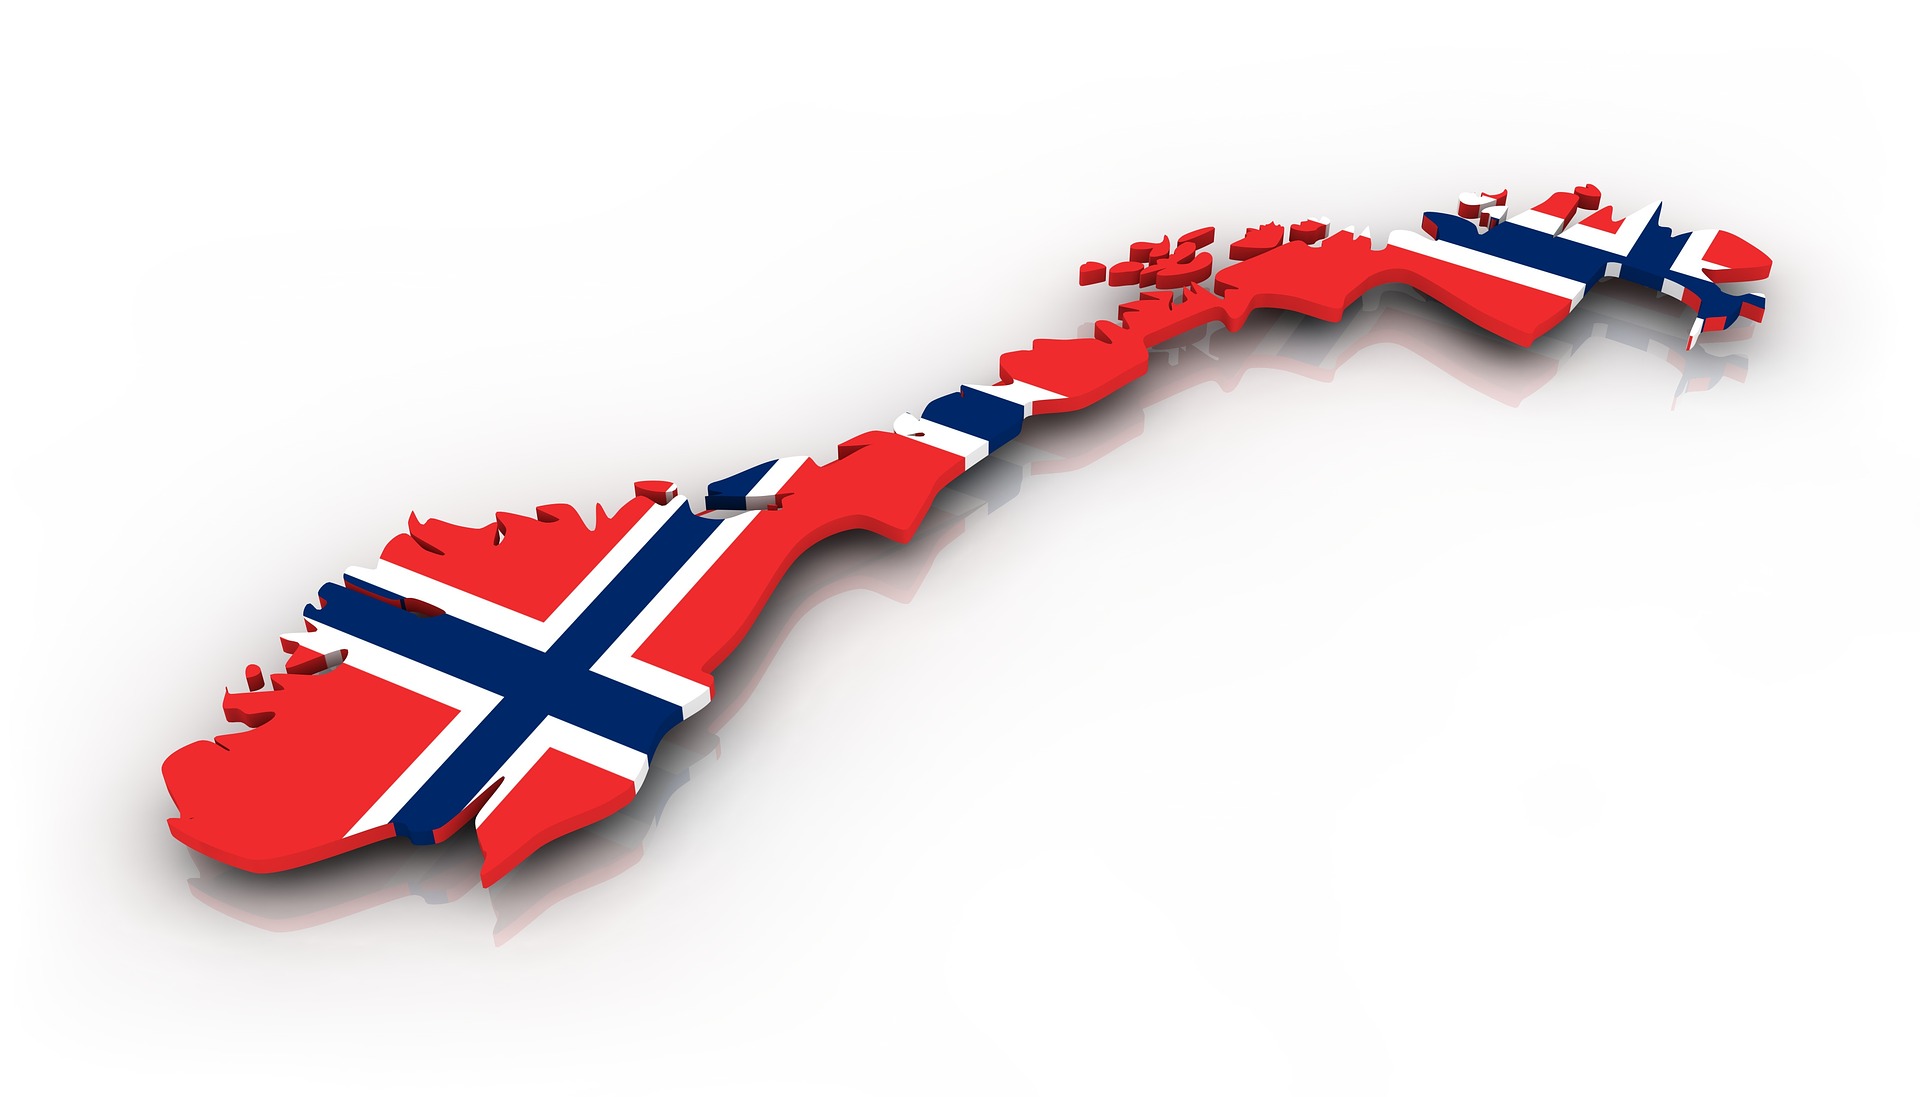 Featured image for “PDK vil verne om Norge som en fri og selvstendig nasjon”